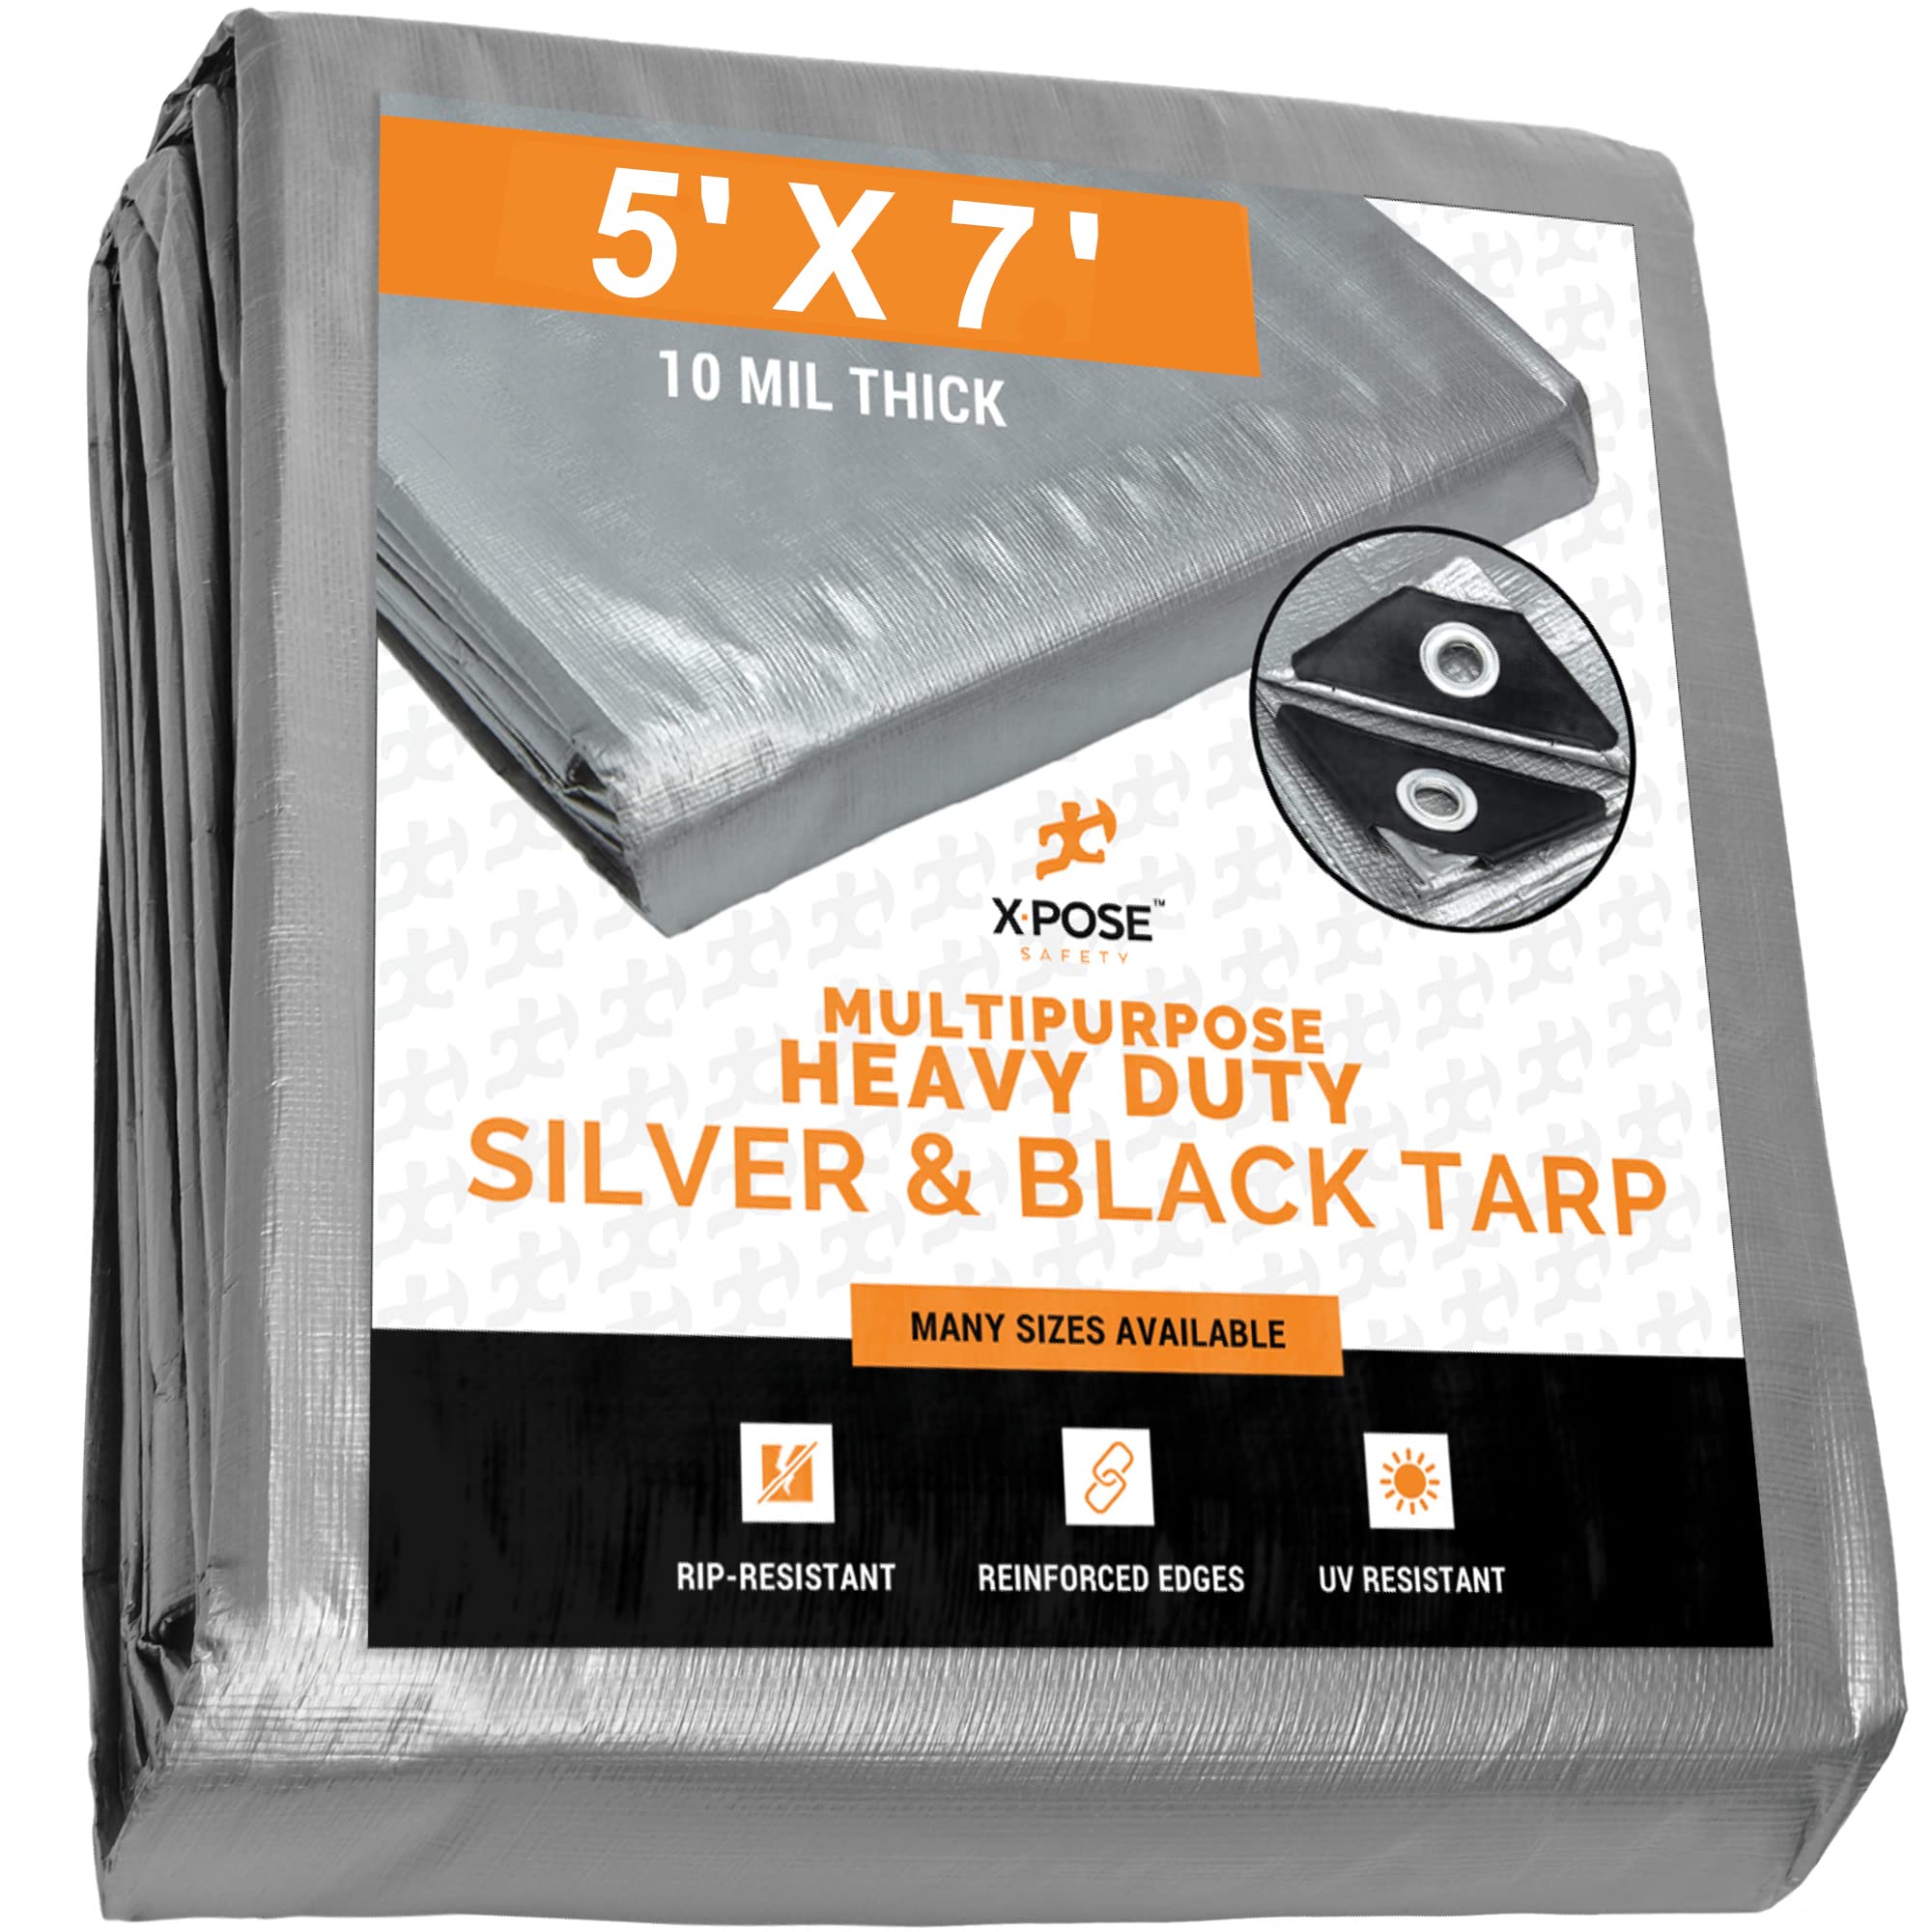 Xpose Safety 重型聚酯防水布 - 10 密耳厚防水、防紫外线保护罩 - 双面银色和黑色 - 层压涂层 - 防锈索环 - 由